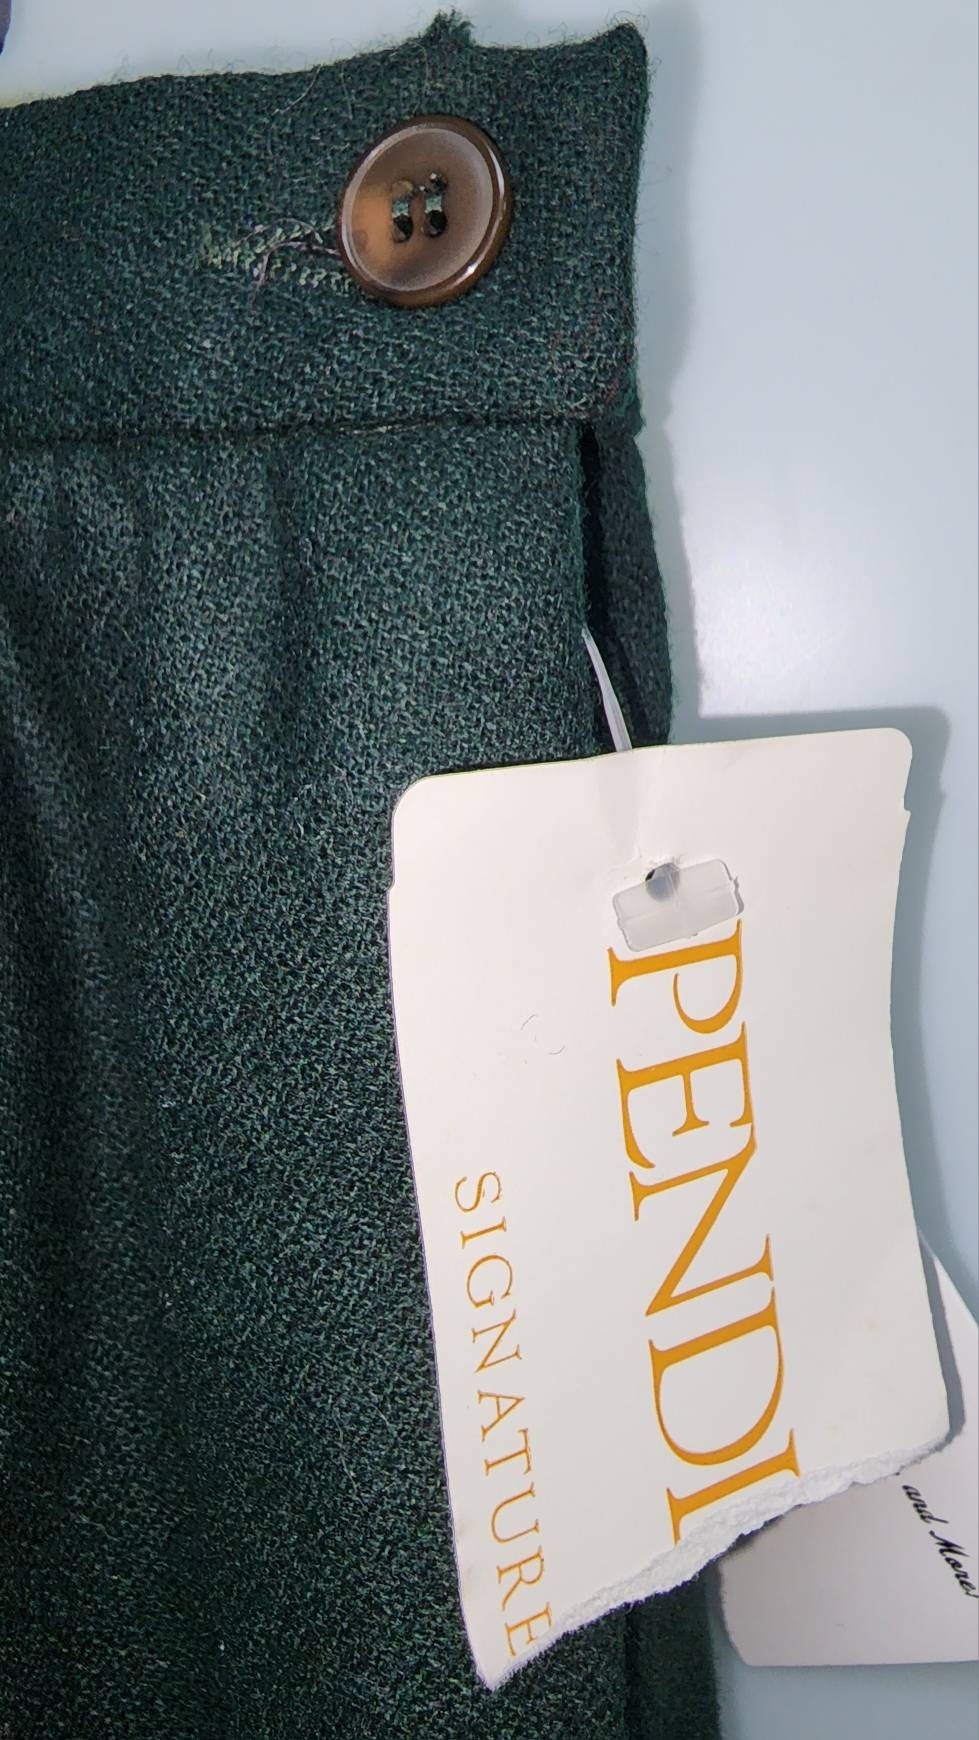 Unworn Vintage Skirt 1980s 90s Pendleton Plus Size Dark Green Wool Pencil Skirt Straight Skirt NWT Rockabilly Pinup XL